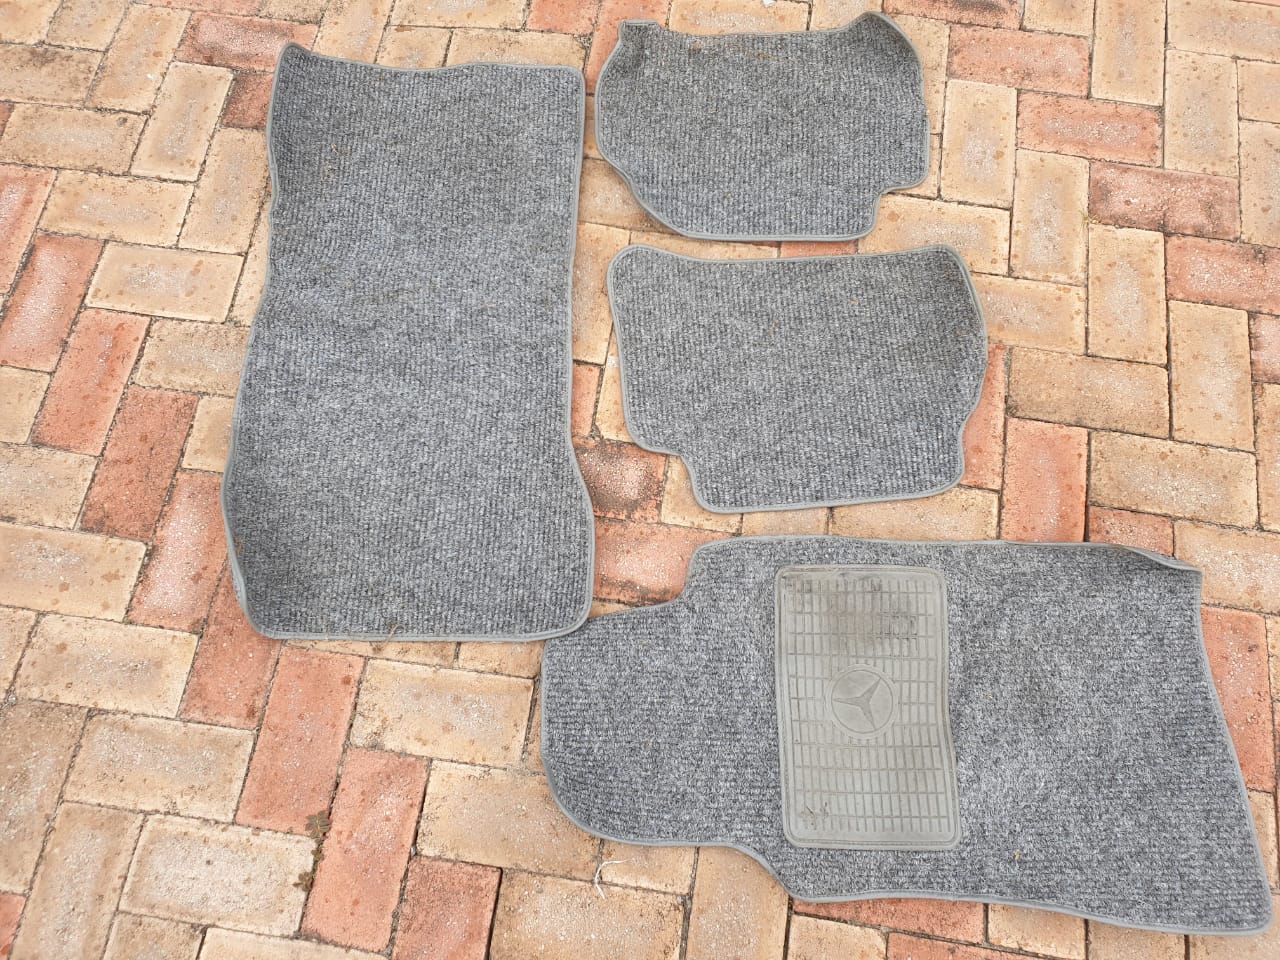 car mats for sale